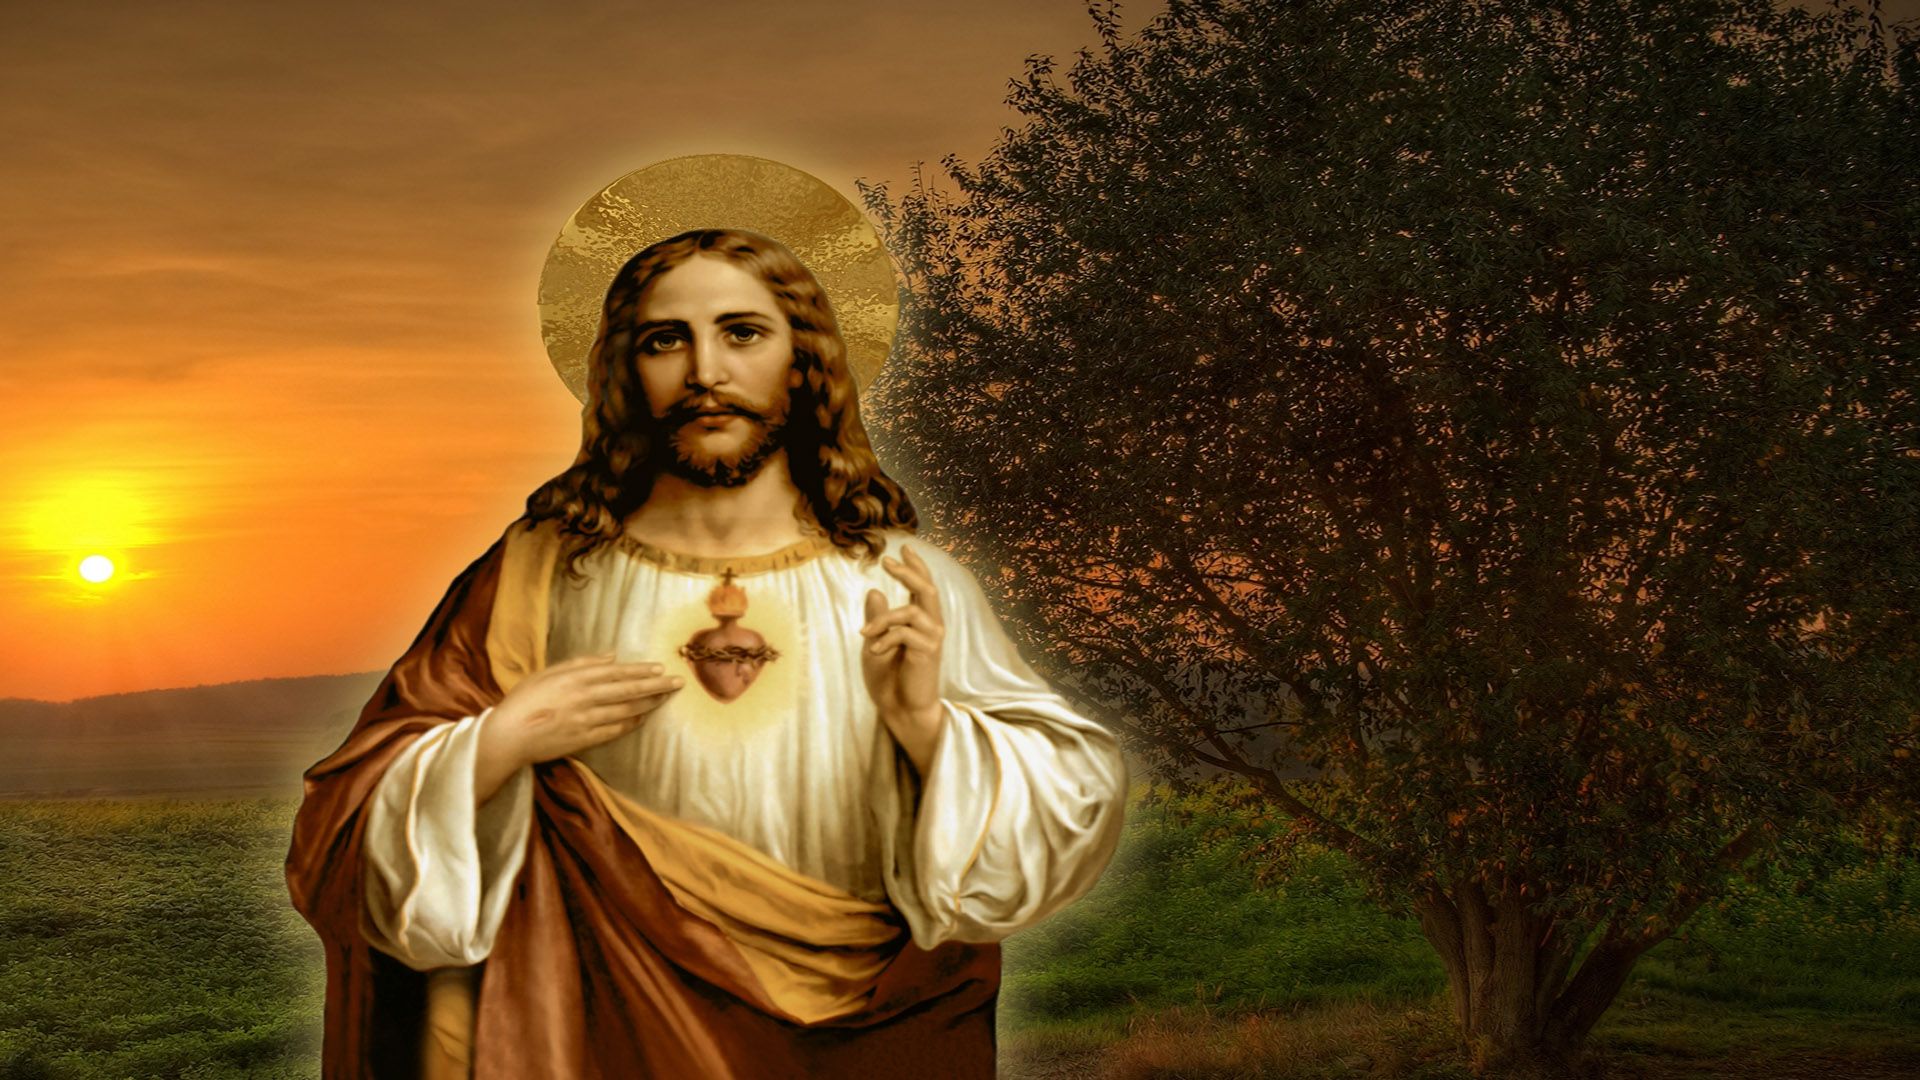 Jesus Christ Image HD Wallpaper Download